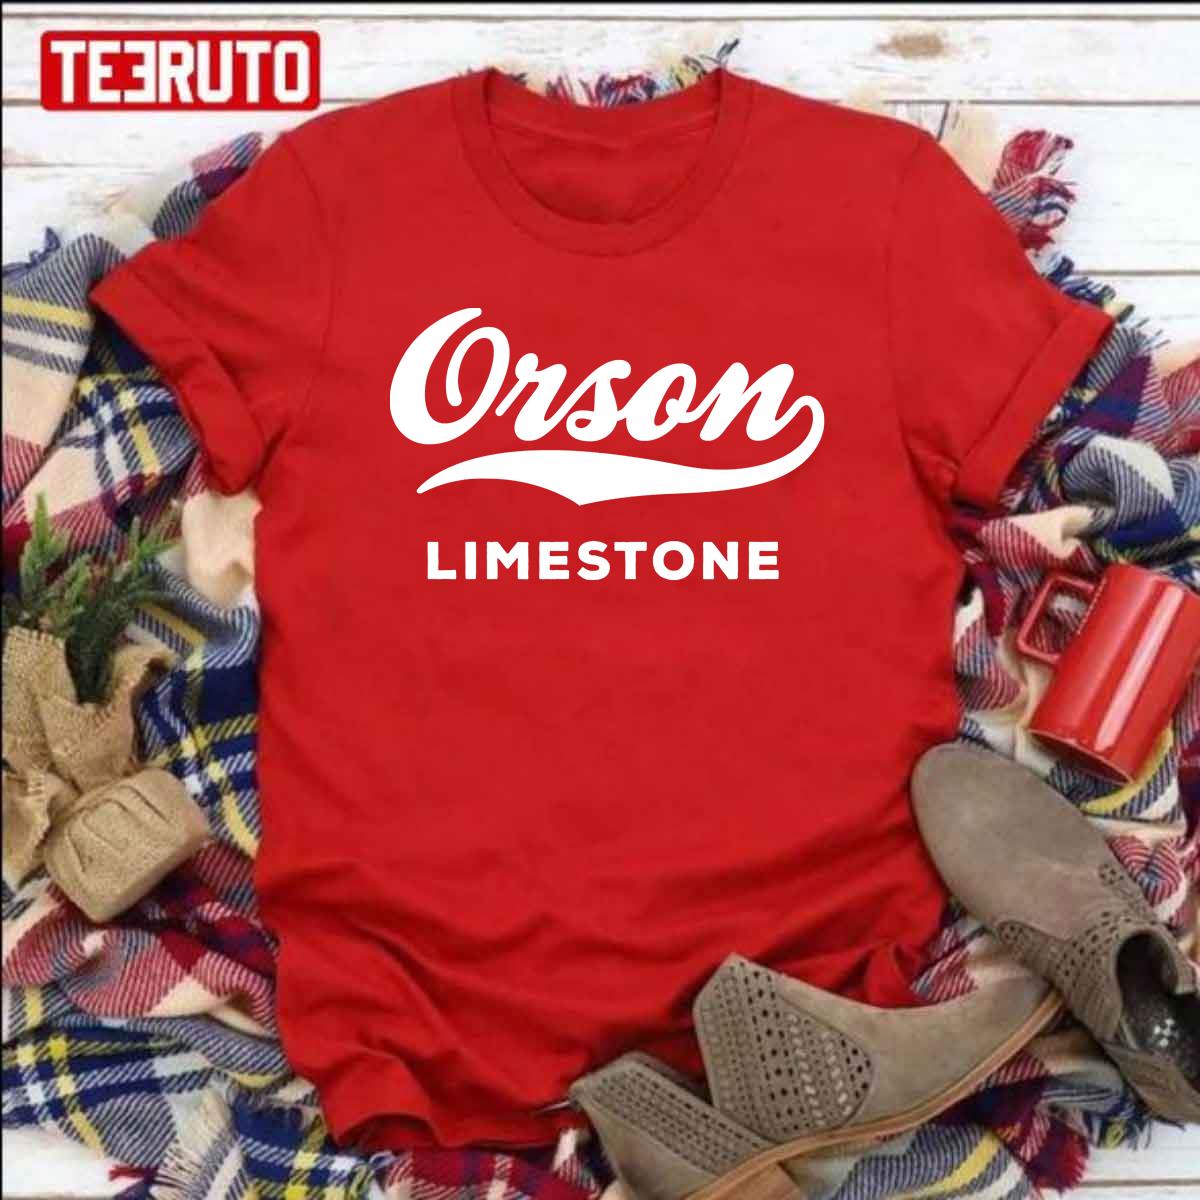 Orson Limestone Unisex T-Shirt